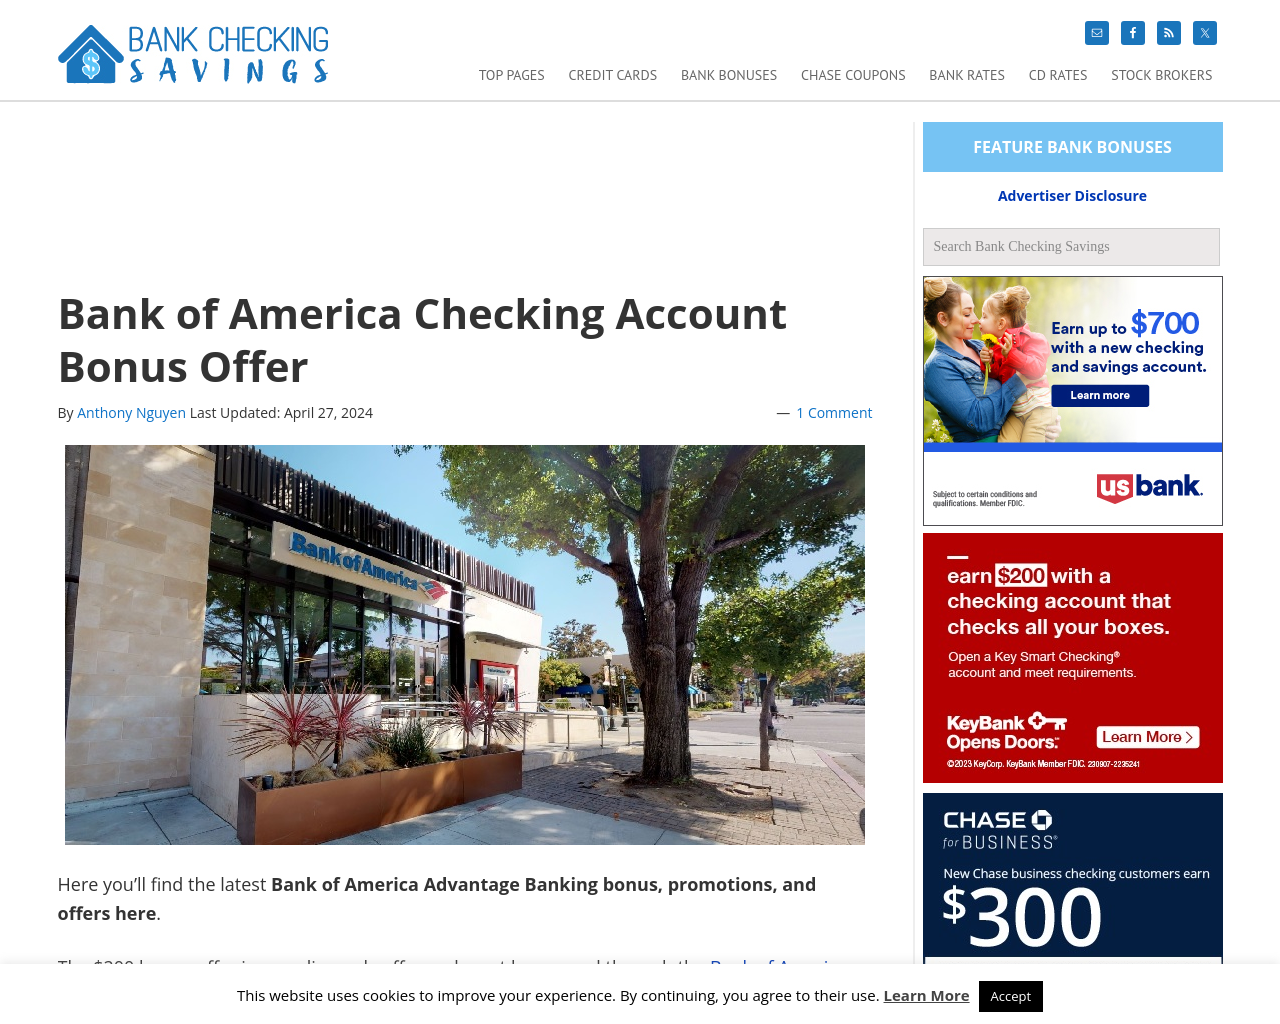 bankcheckingsavings.com